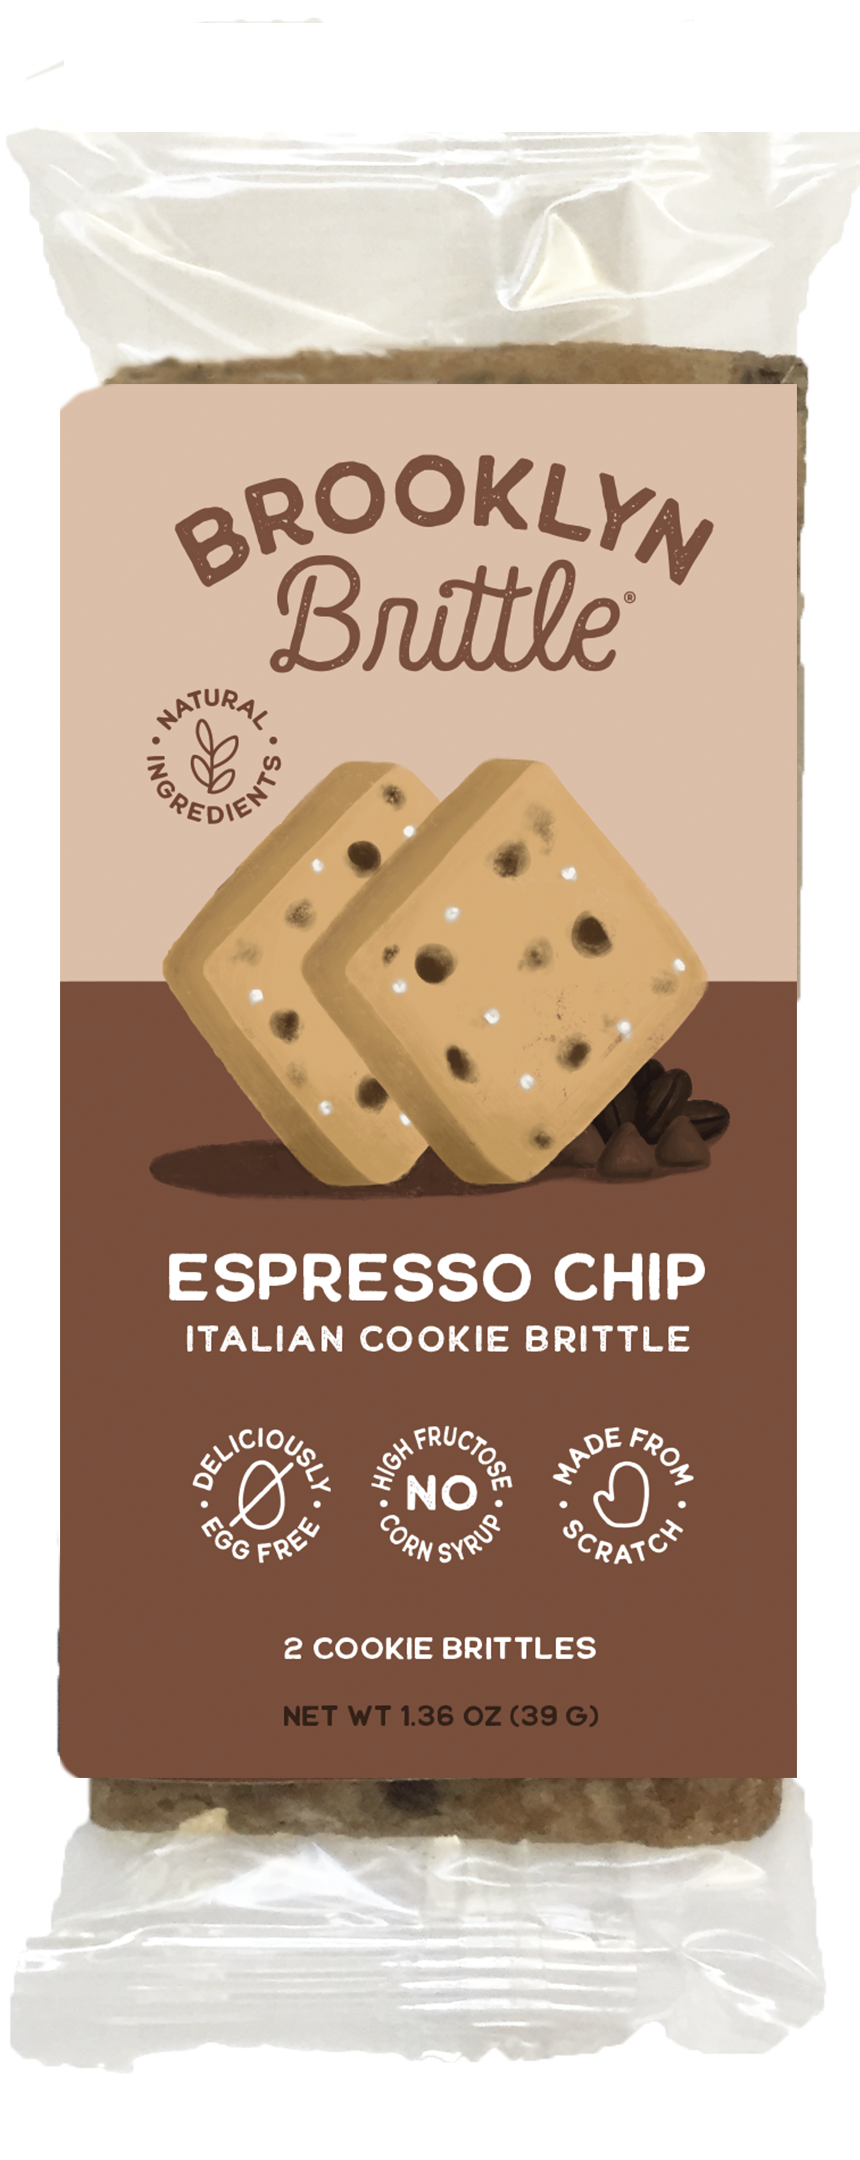 Espresso Chip Snack Pack